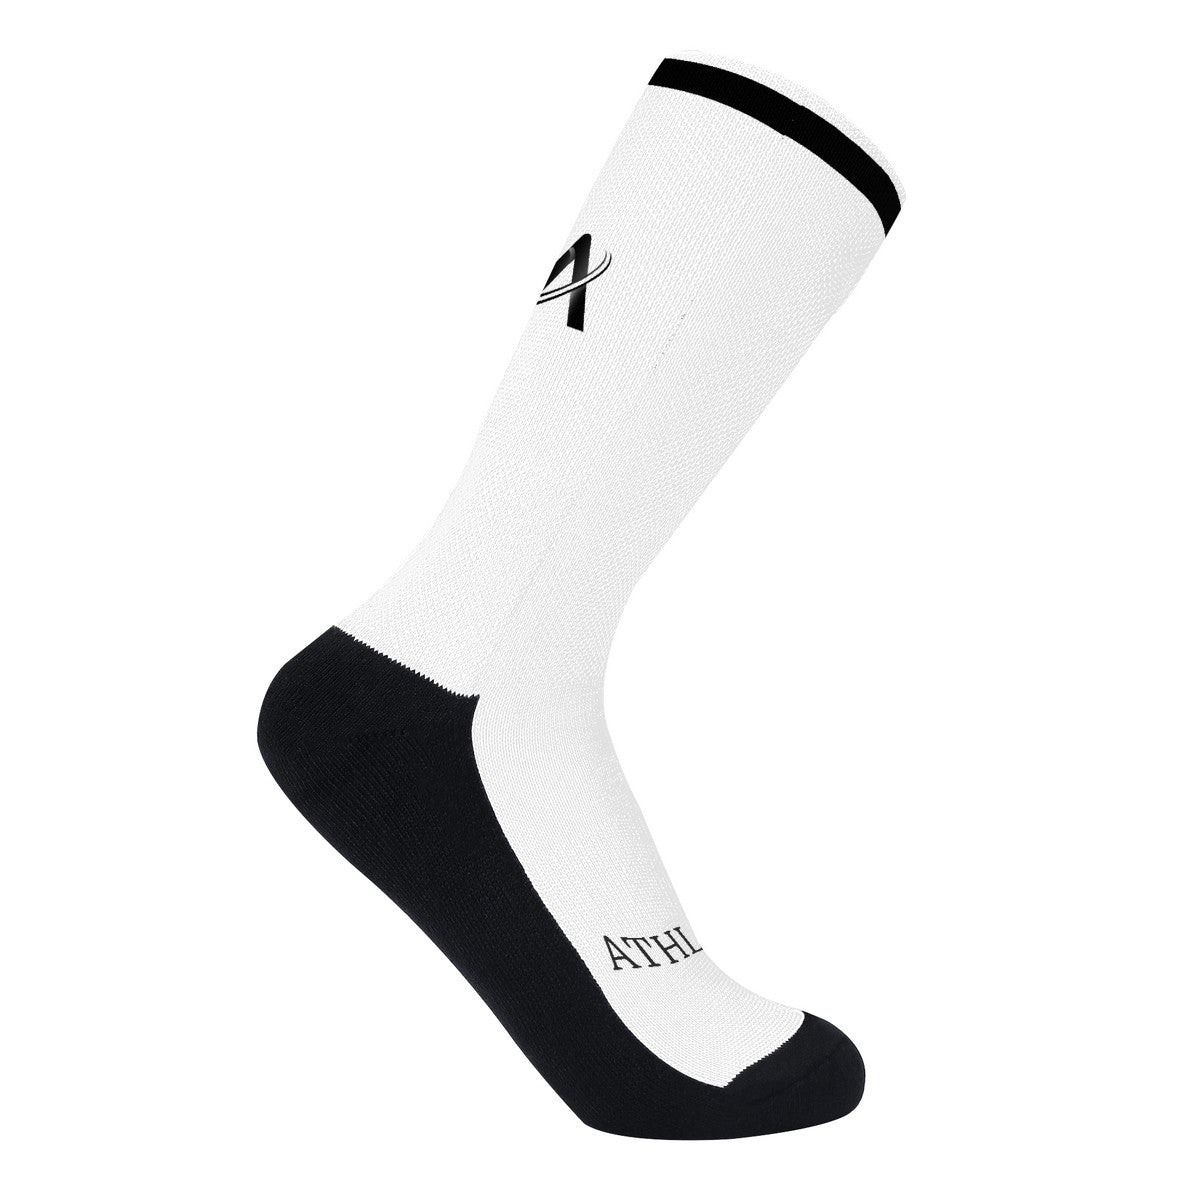 ATHLETiX Sports Socks